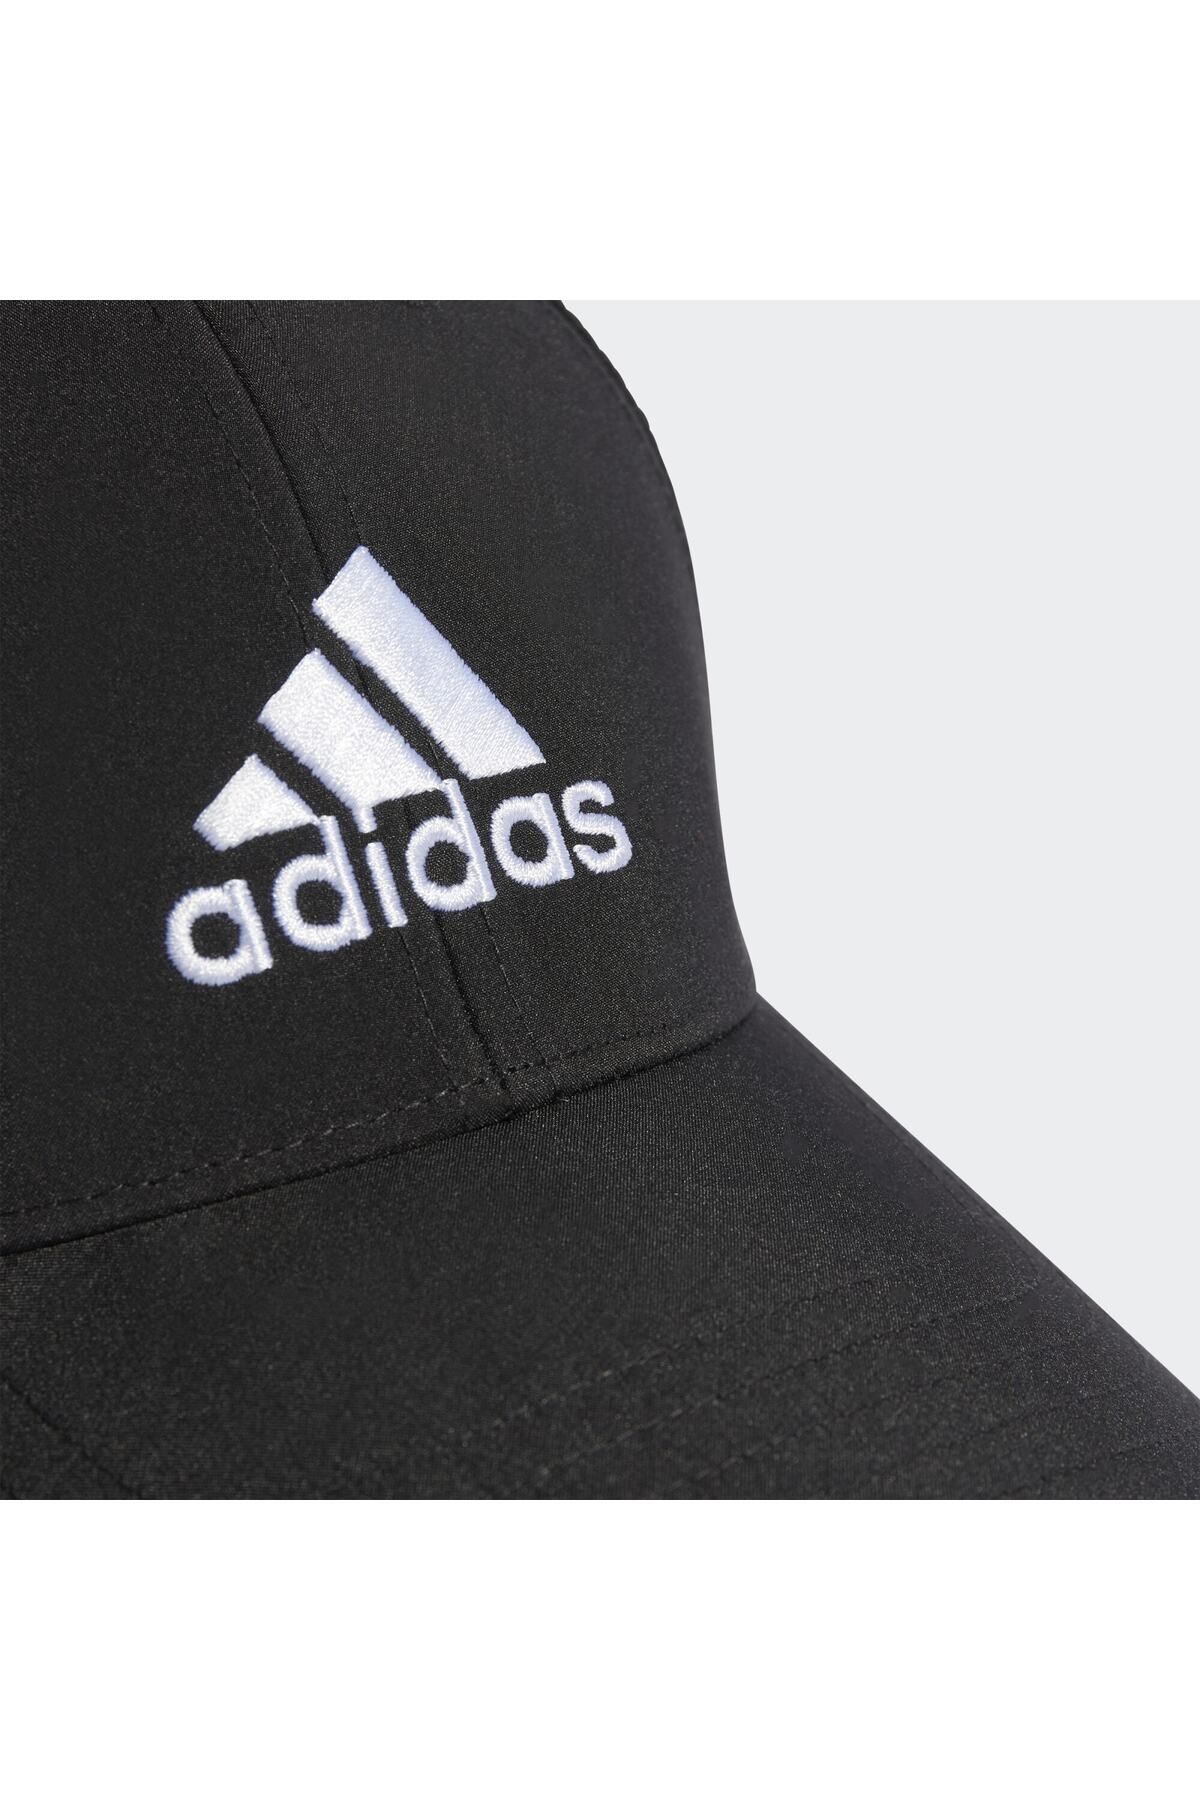 adidas کلاه بیس بال سبک وزن آرم گلدوزی شده